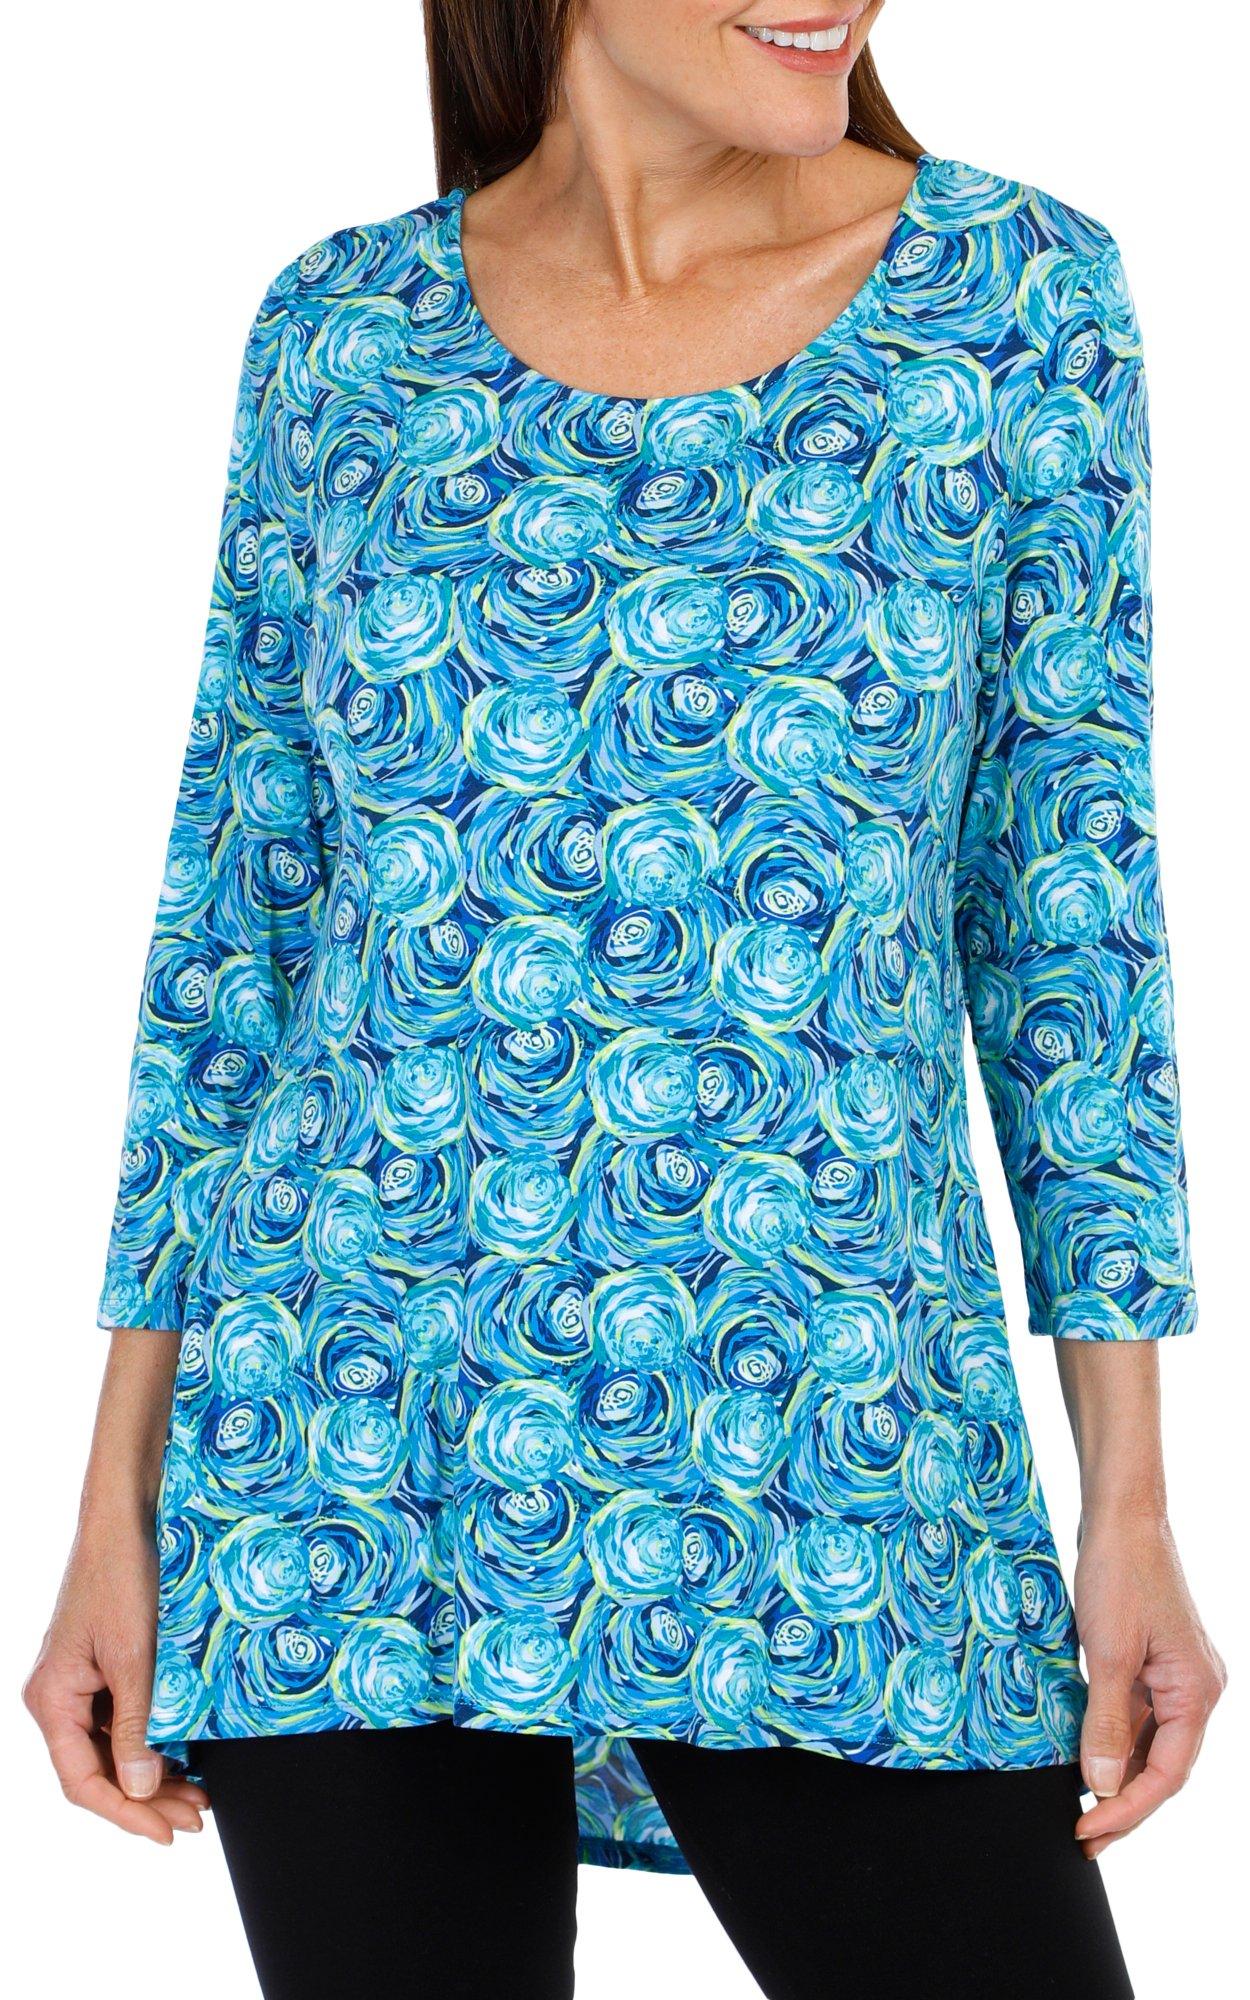 Khakis & Co Womens Swirl Print 3/4 Sleeve Top